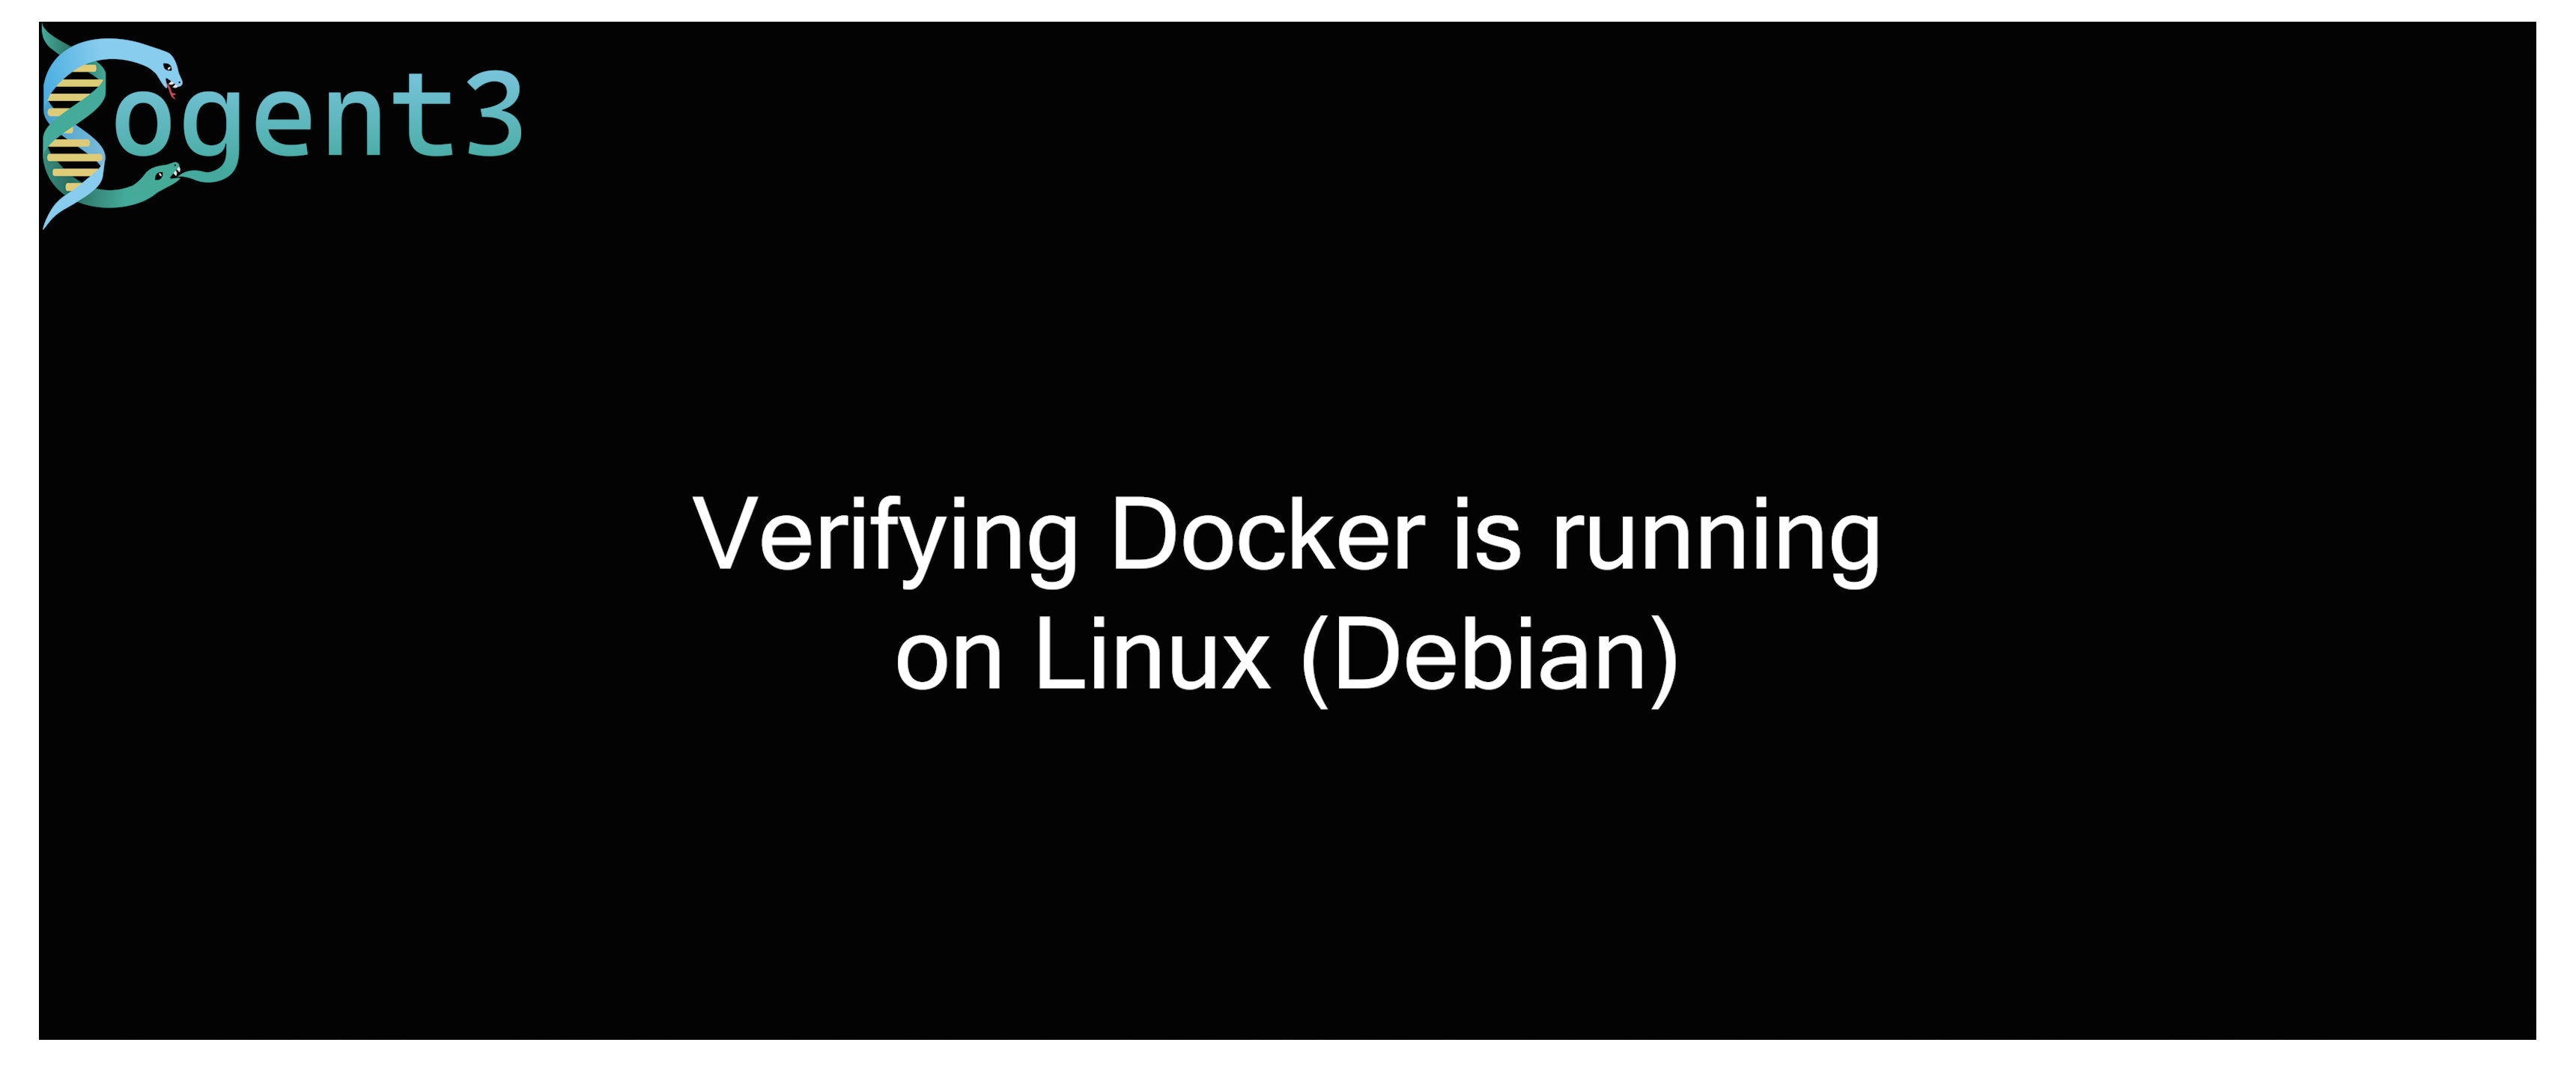 Verifying that Docker is running on Linux